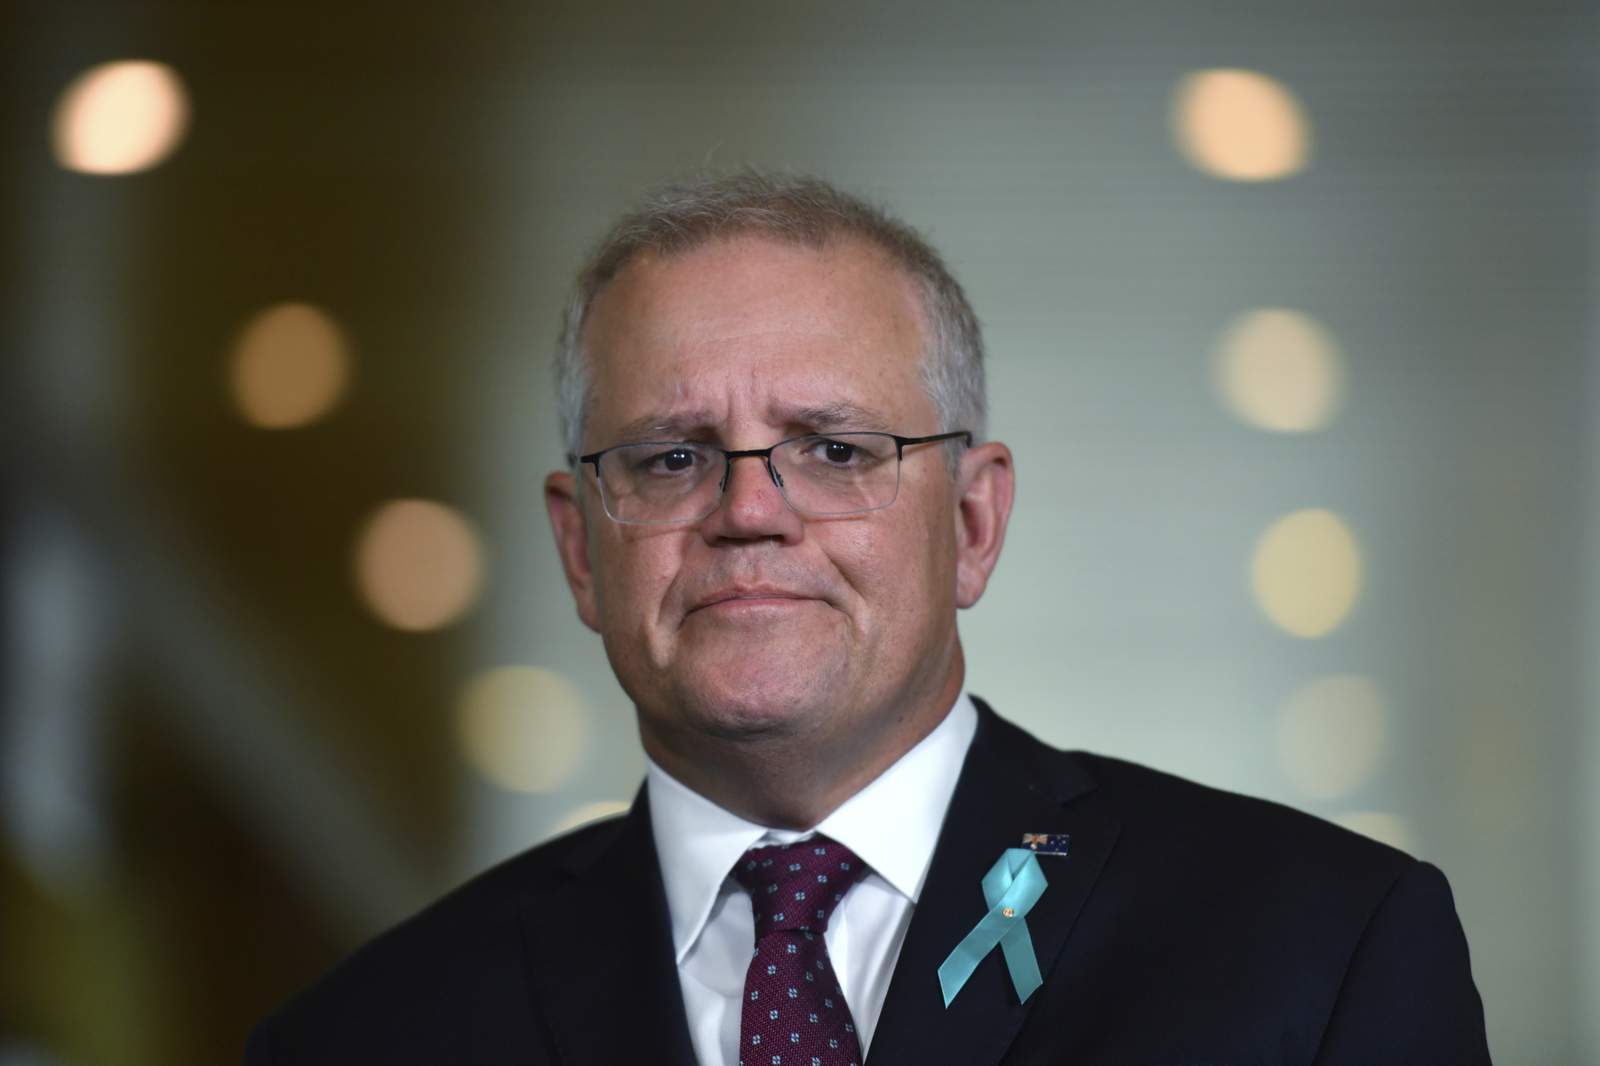 Australian PM apologizes to ex-staffer alleging rape at work